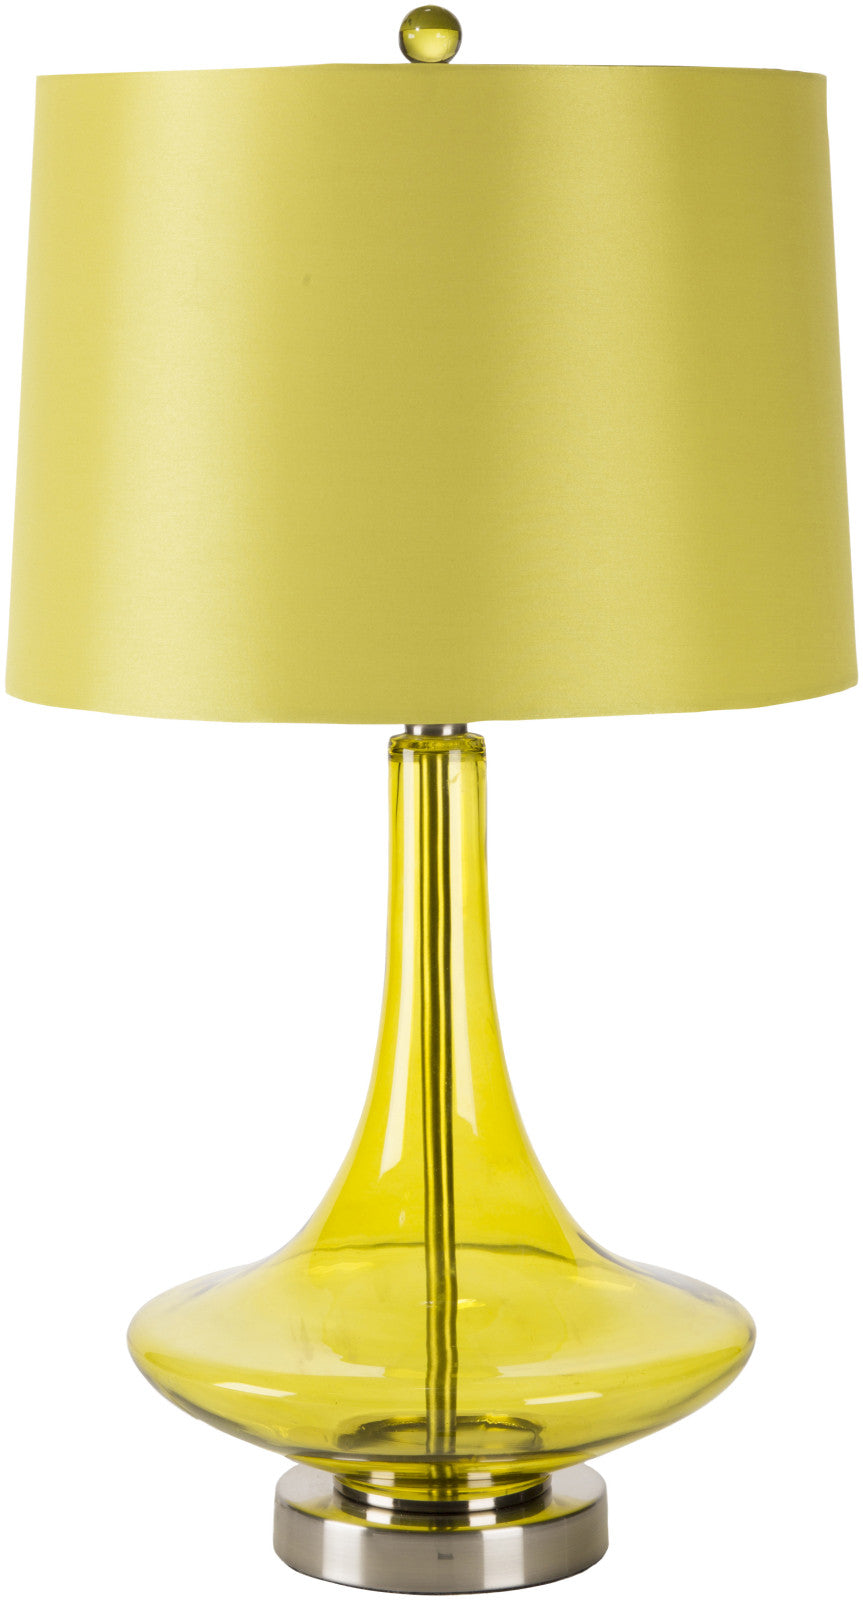 Surya Zoey ZOLP-002 Green Lamp Table Lamp